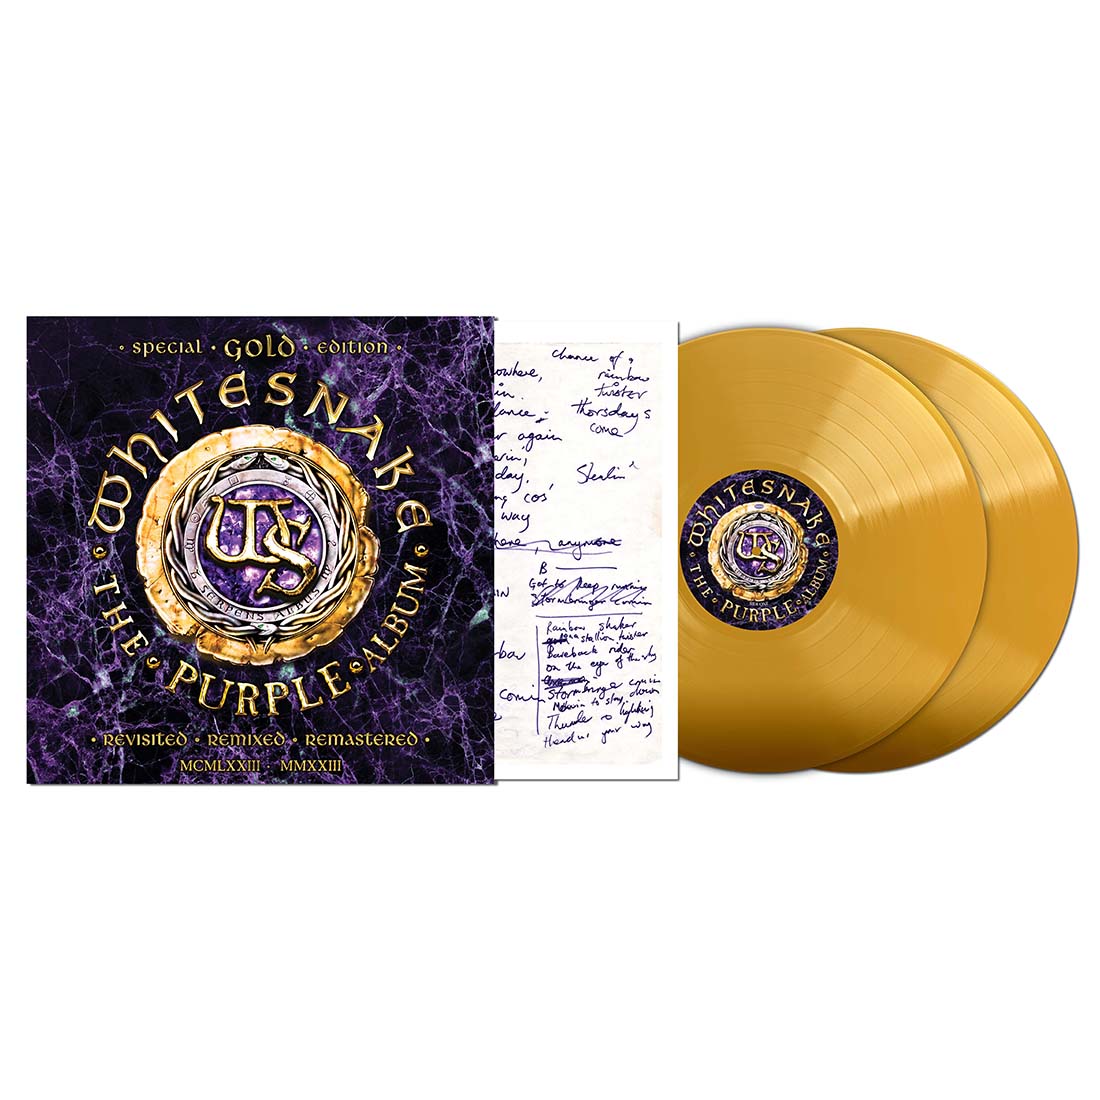 Whitesnake - The Purple Album - Special Gold Edition: Gold Vinyl 2LP